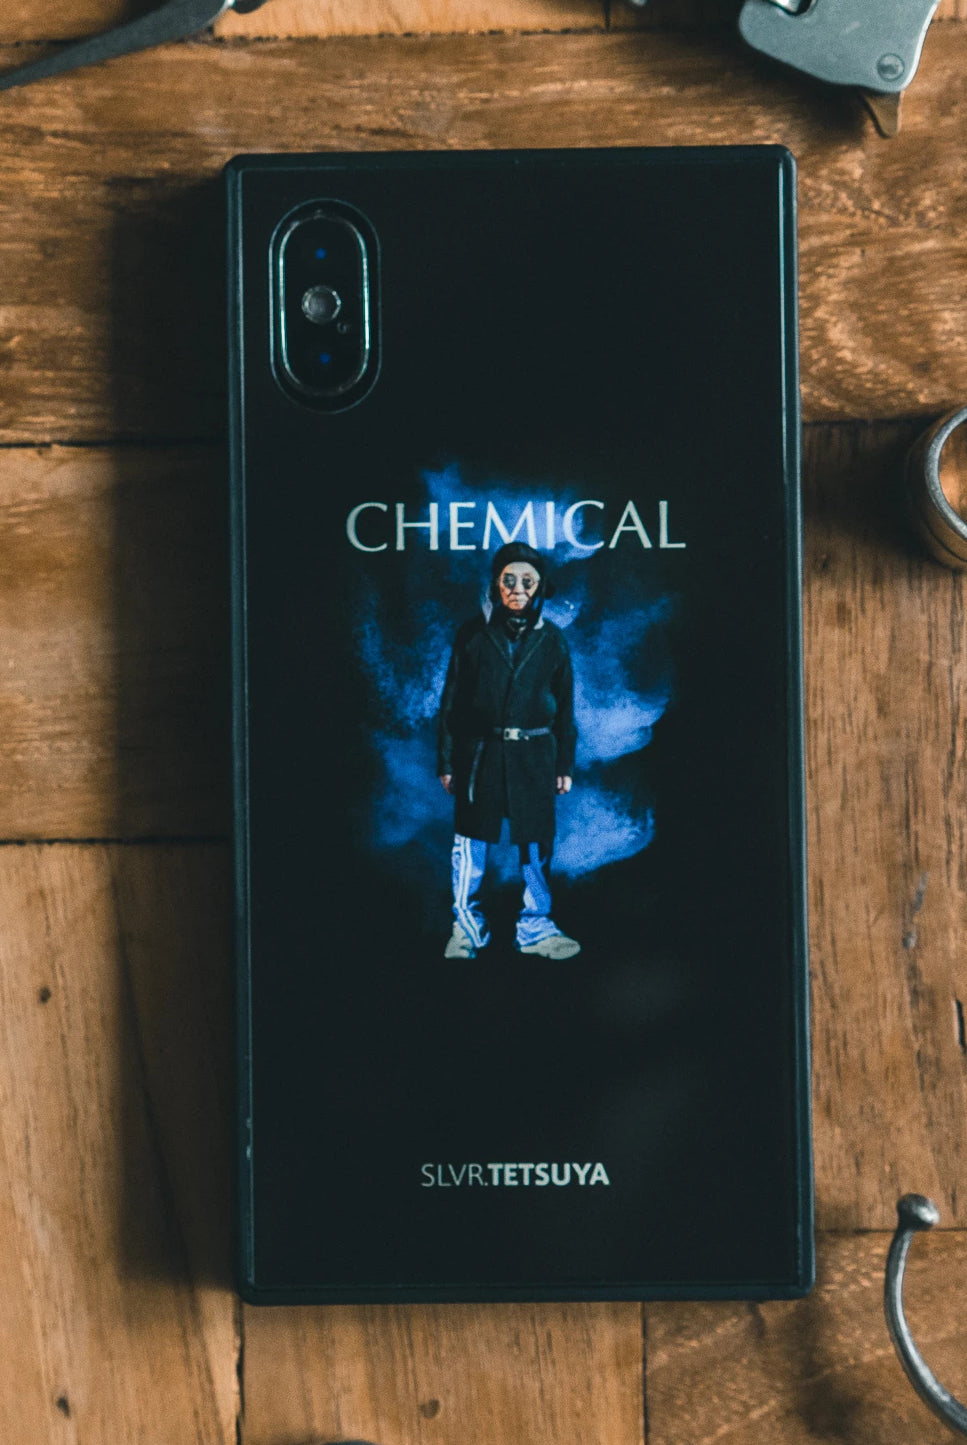 SLVR.TETUYA iPhone Case (X/XS) "CHEMICAL"